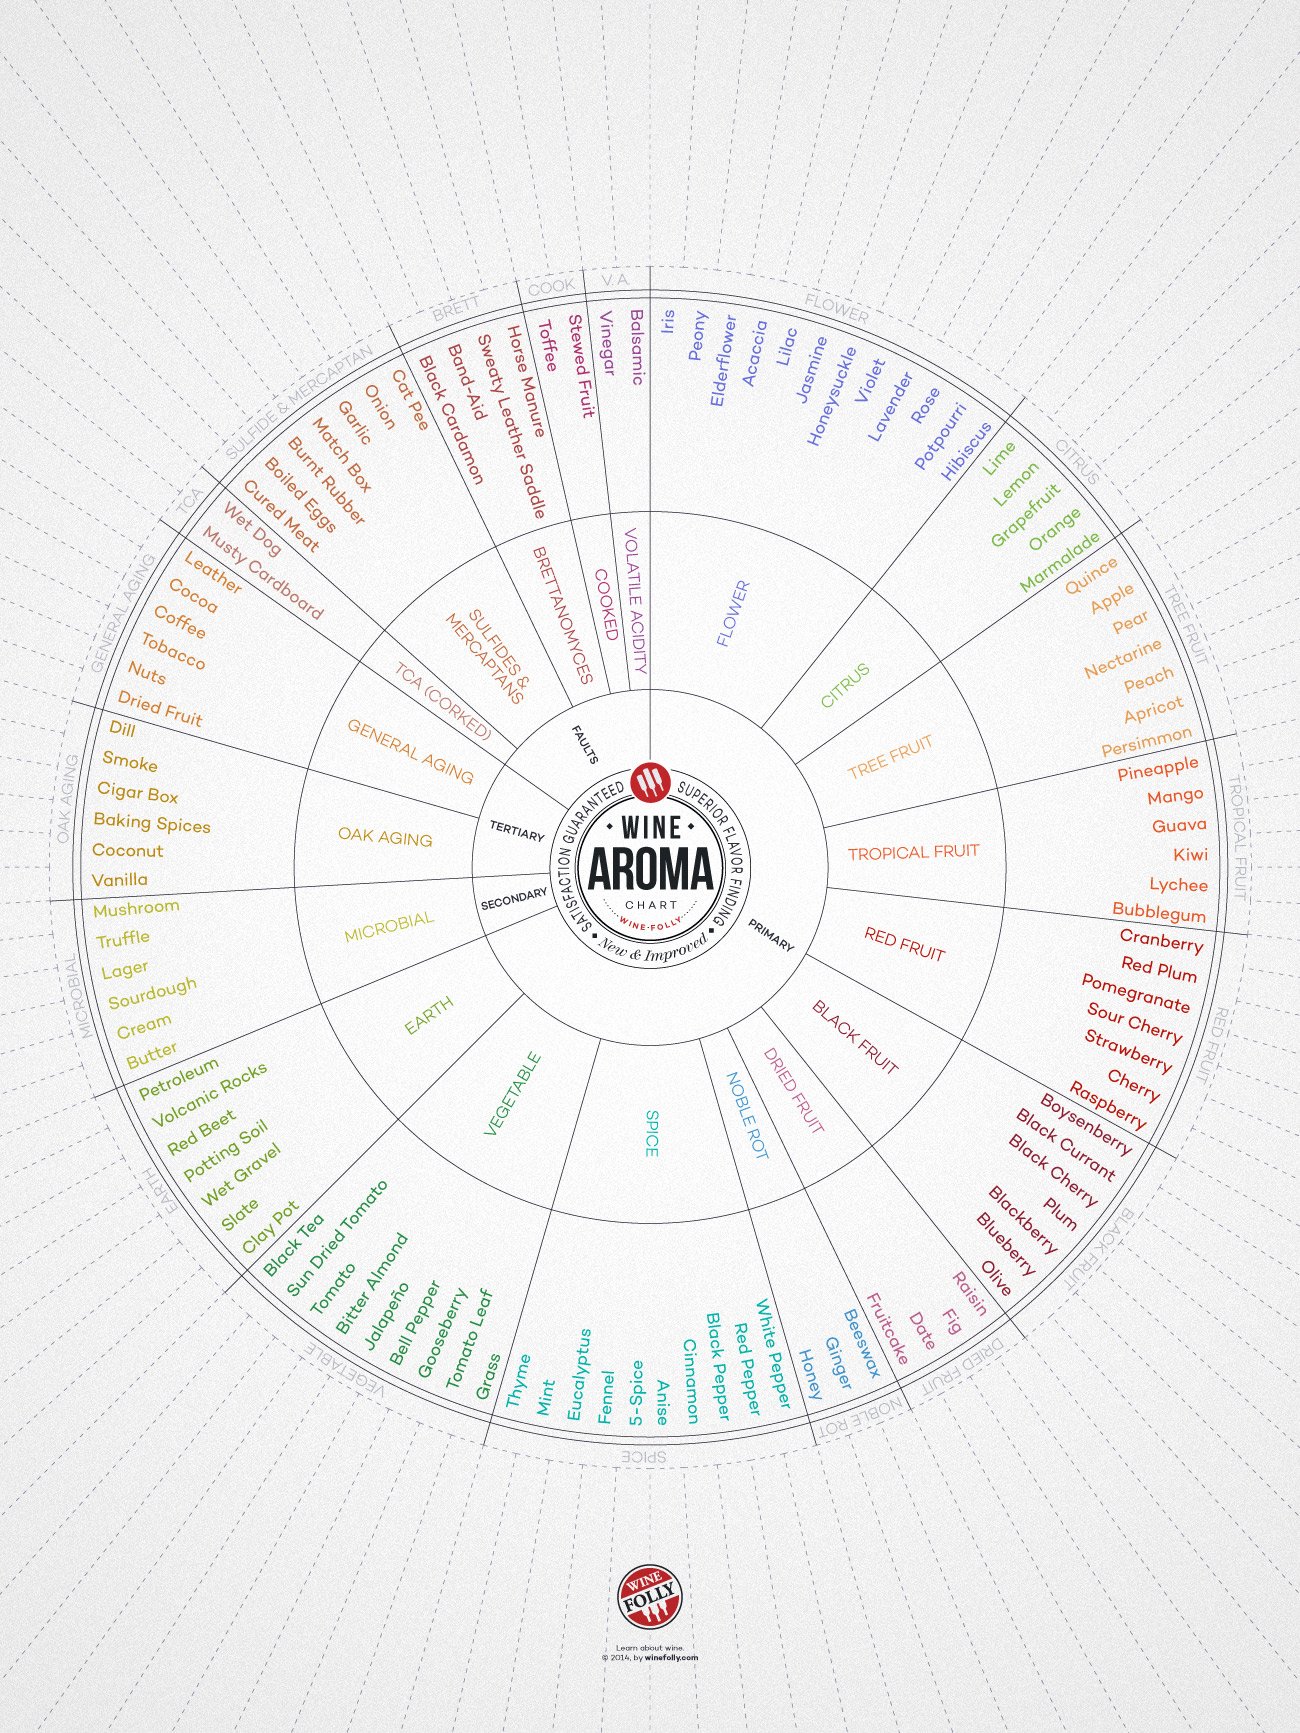 Wine aroma wheel